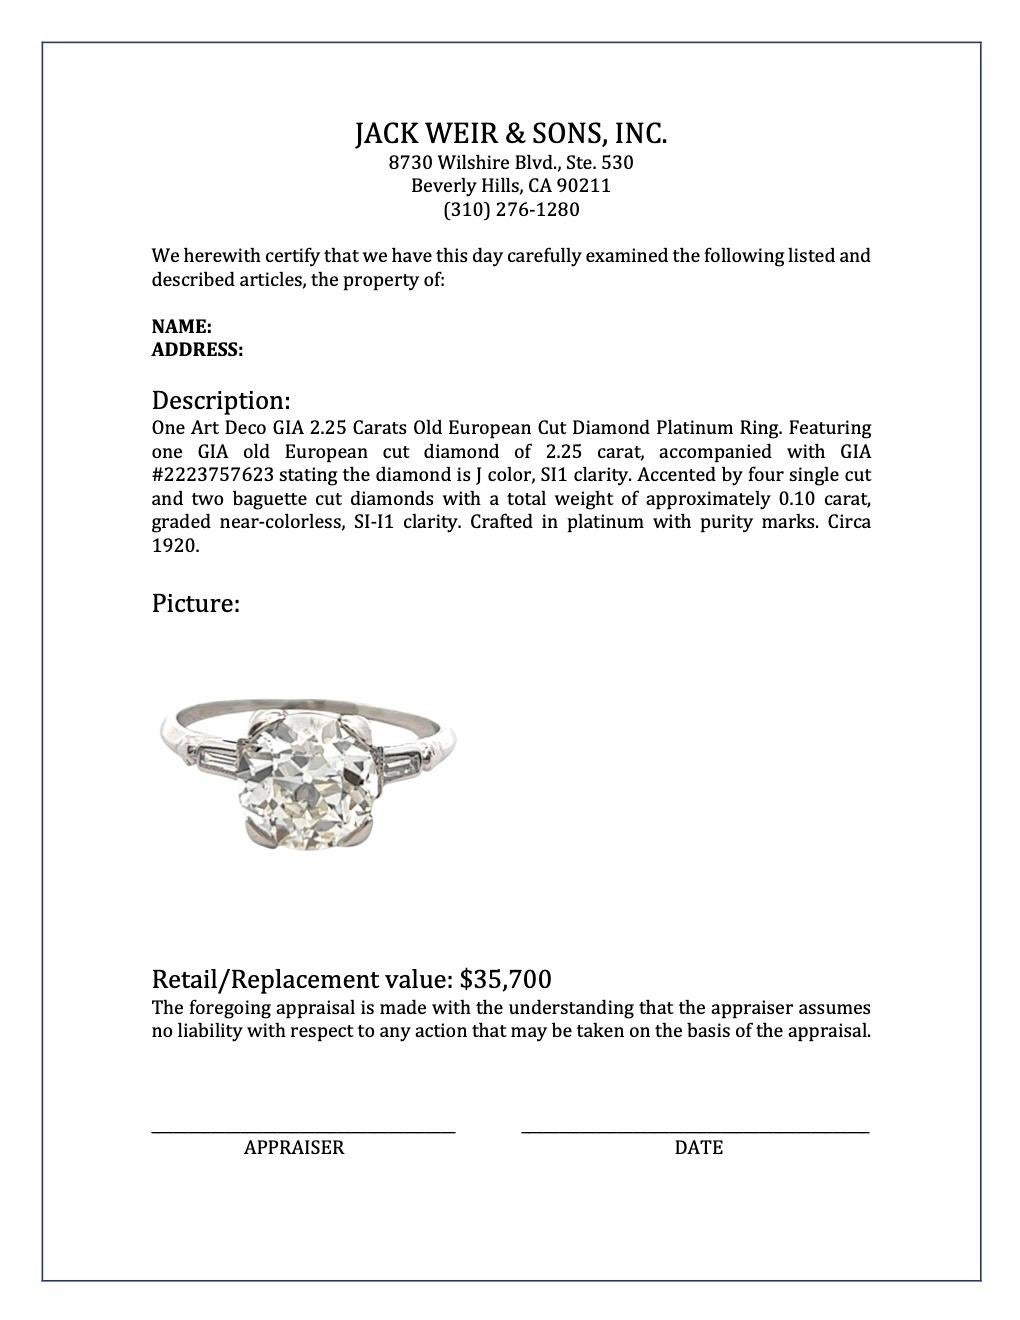 Art Deco GIA 2.25 Carats Old European Cut Diamond Platinum Ring 4